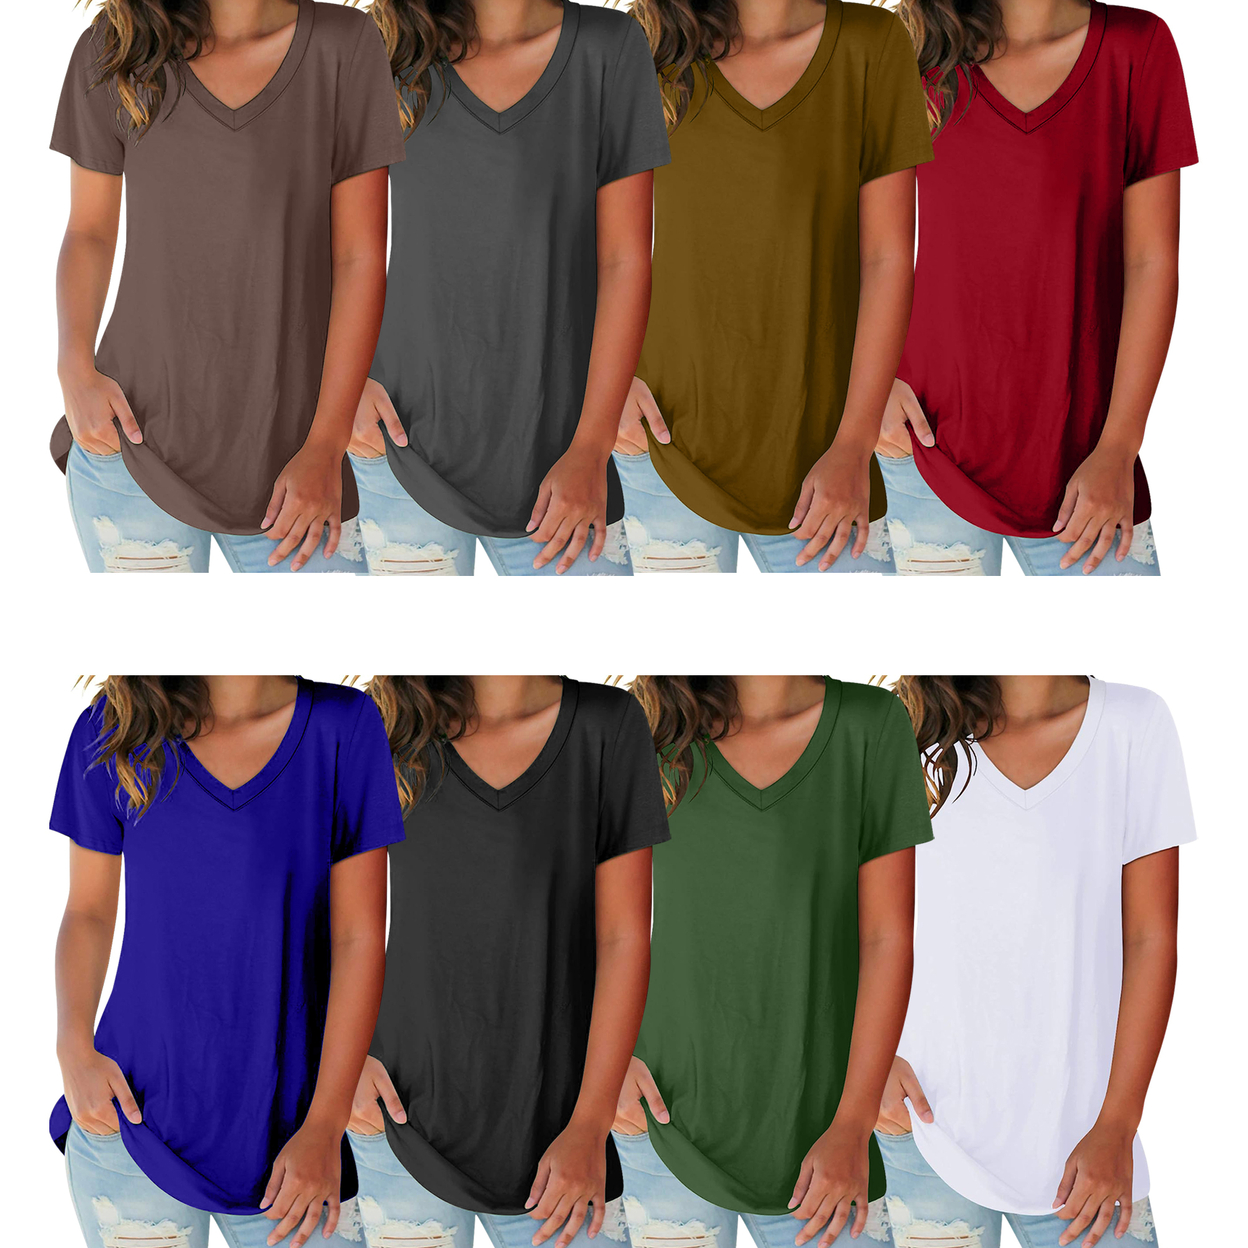 2-Pack: Women's Ultra Soft Smooth Cotton Blend Basic V-Neck Short Sleeve Shirts - Black & Grey, Small